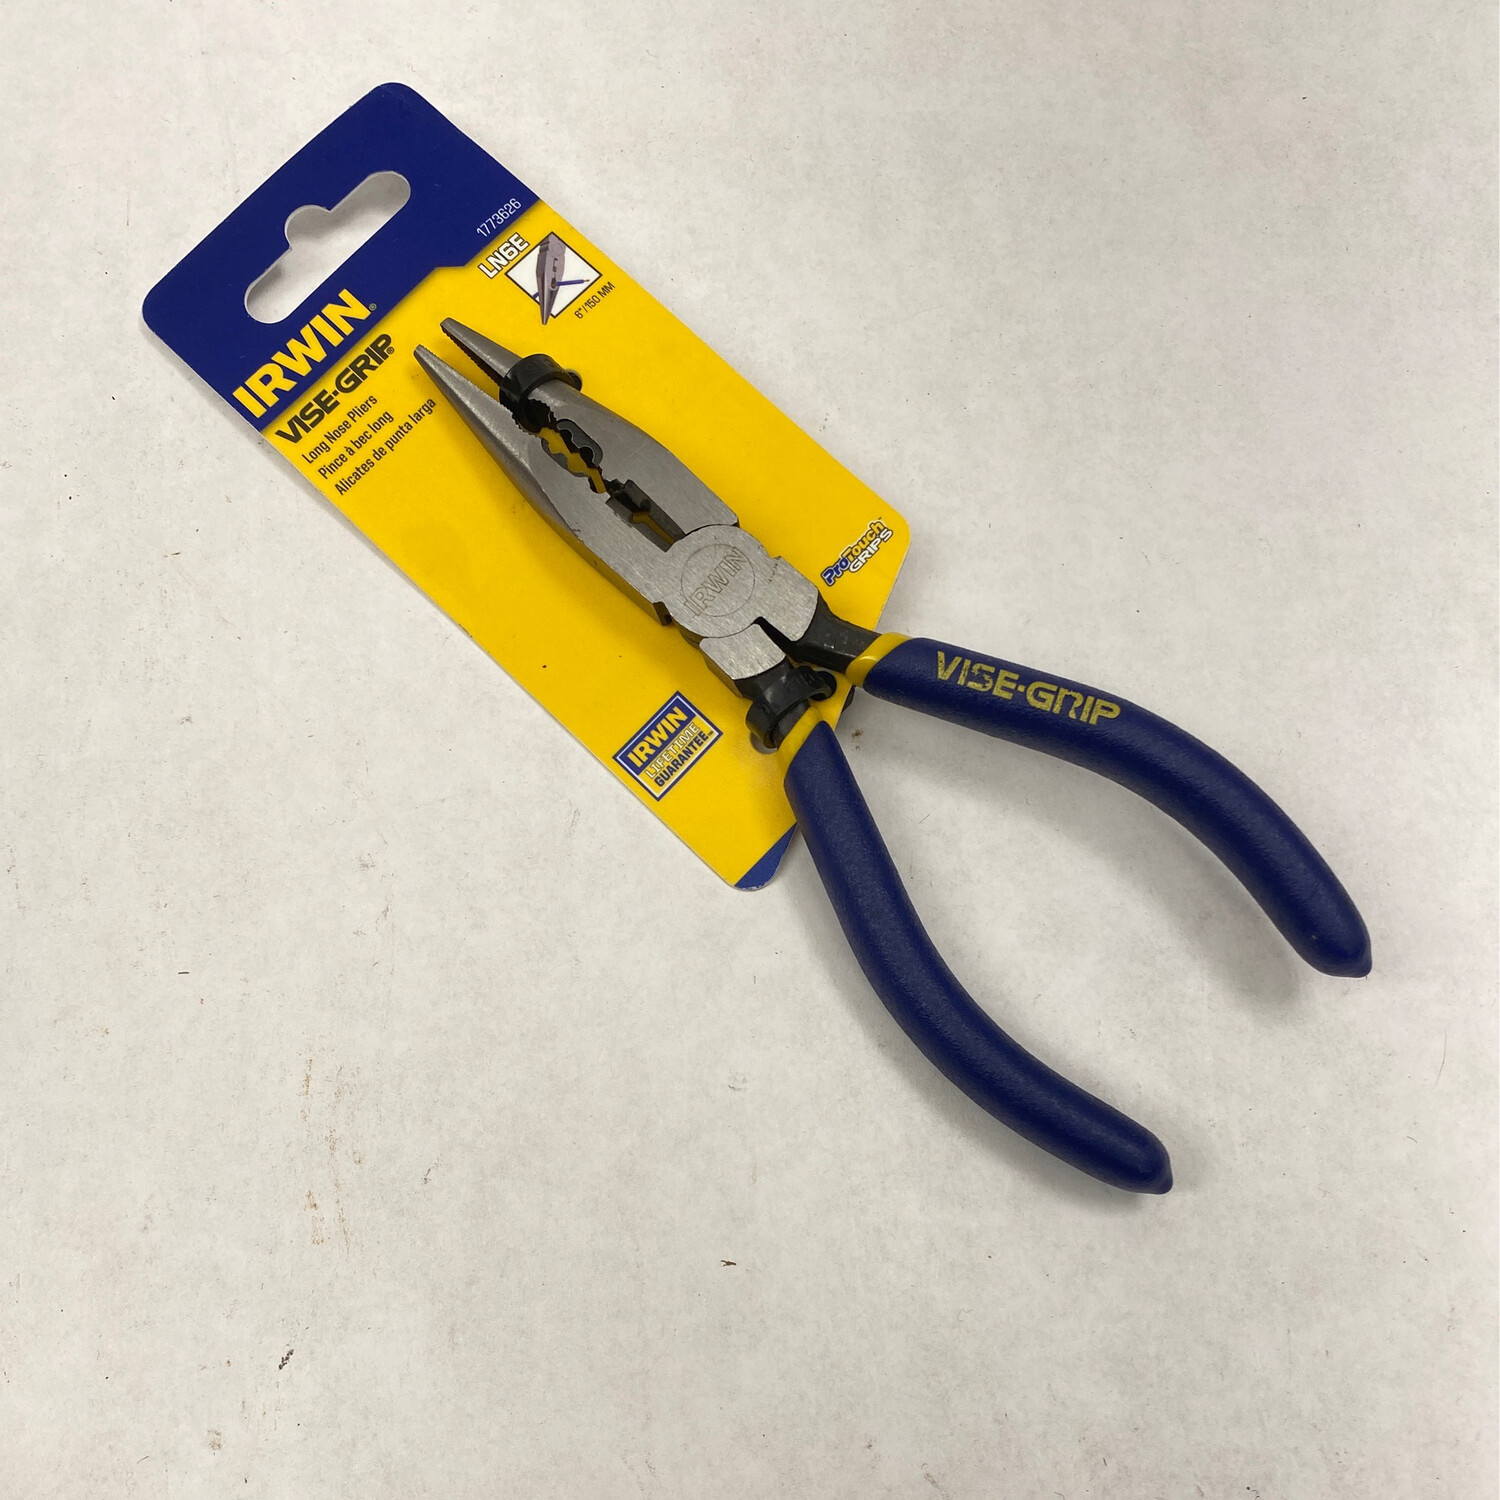 Irwin Vice Grip 6” Long Nose Utility Pliers, LN6E